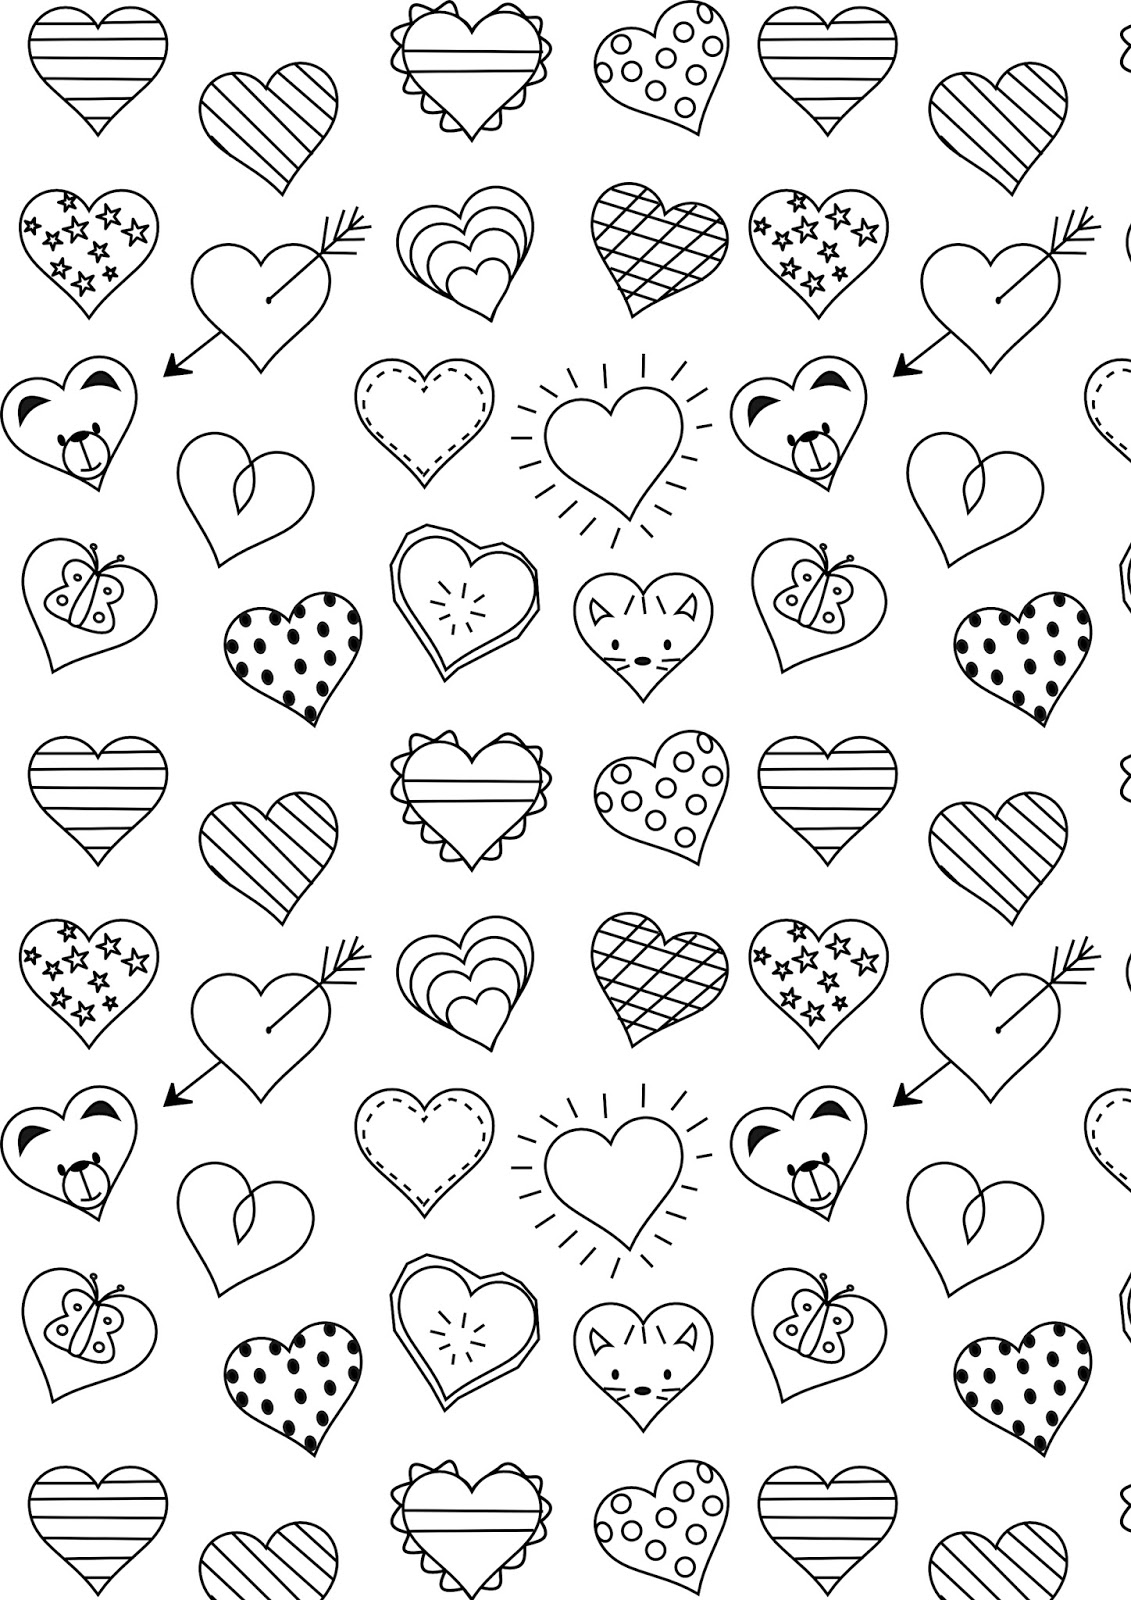 Free printable heart coloring page - ausdruckbare Ausmalseite - freebie